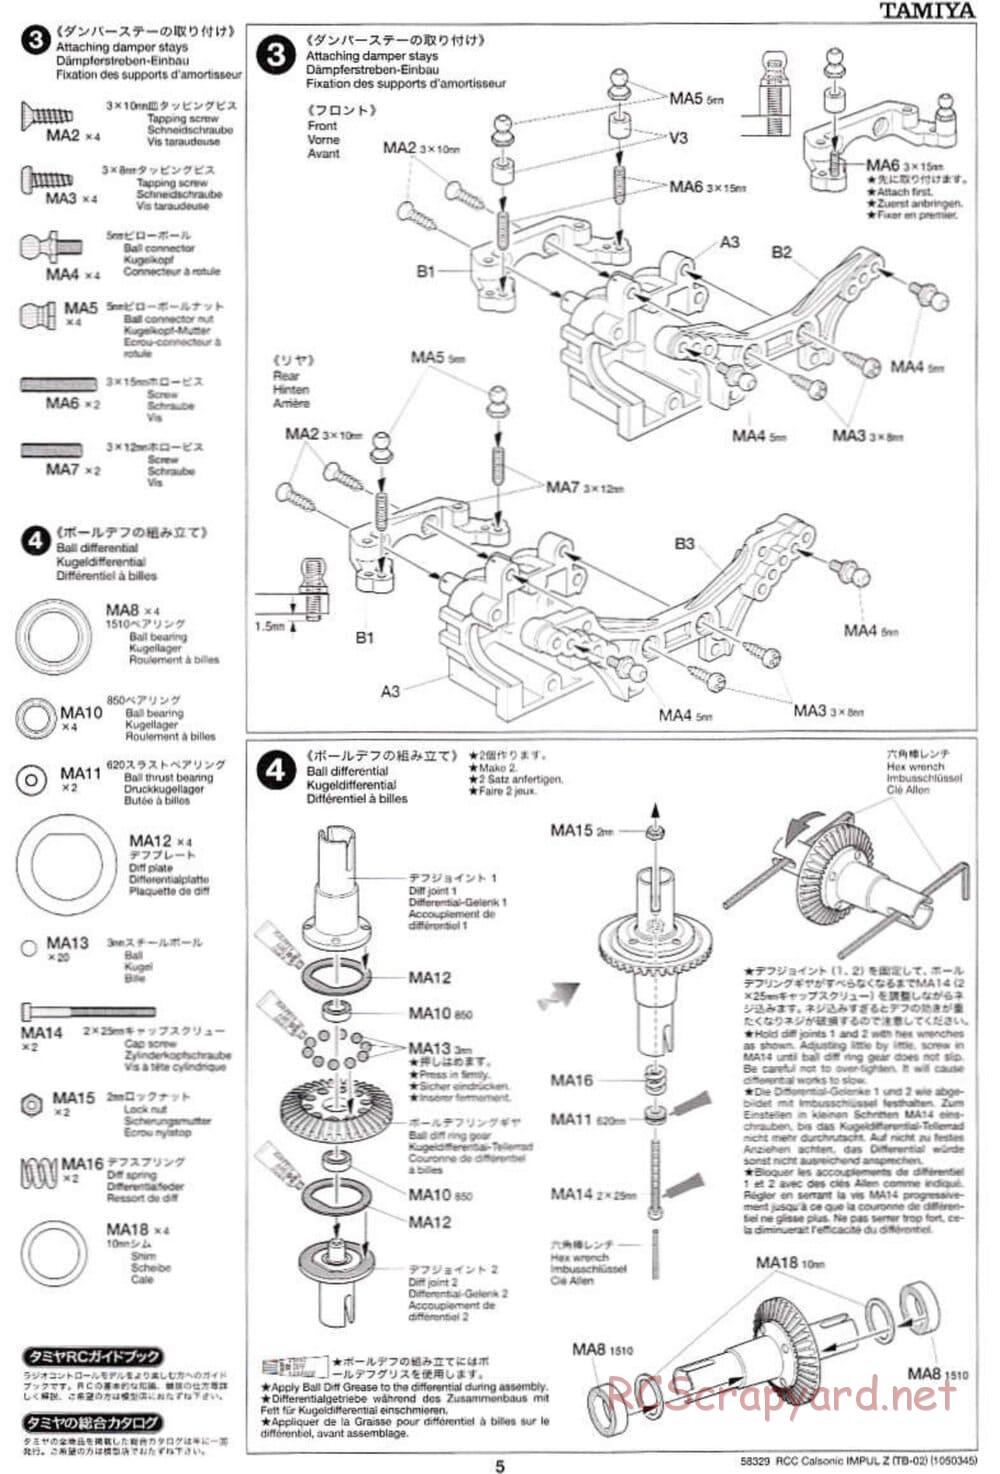 Tamiya - Calsonic Impul Z - TB-02 Chassis - Manual - Page 5